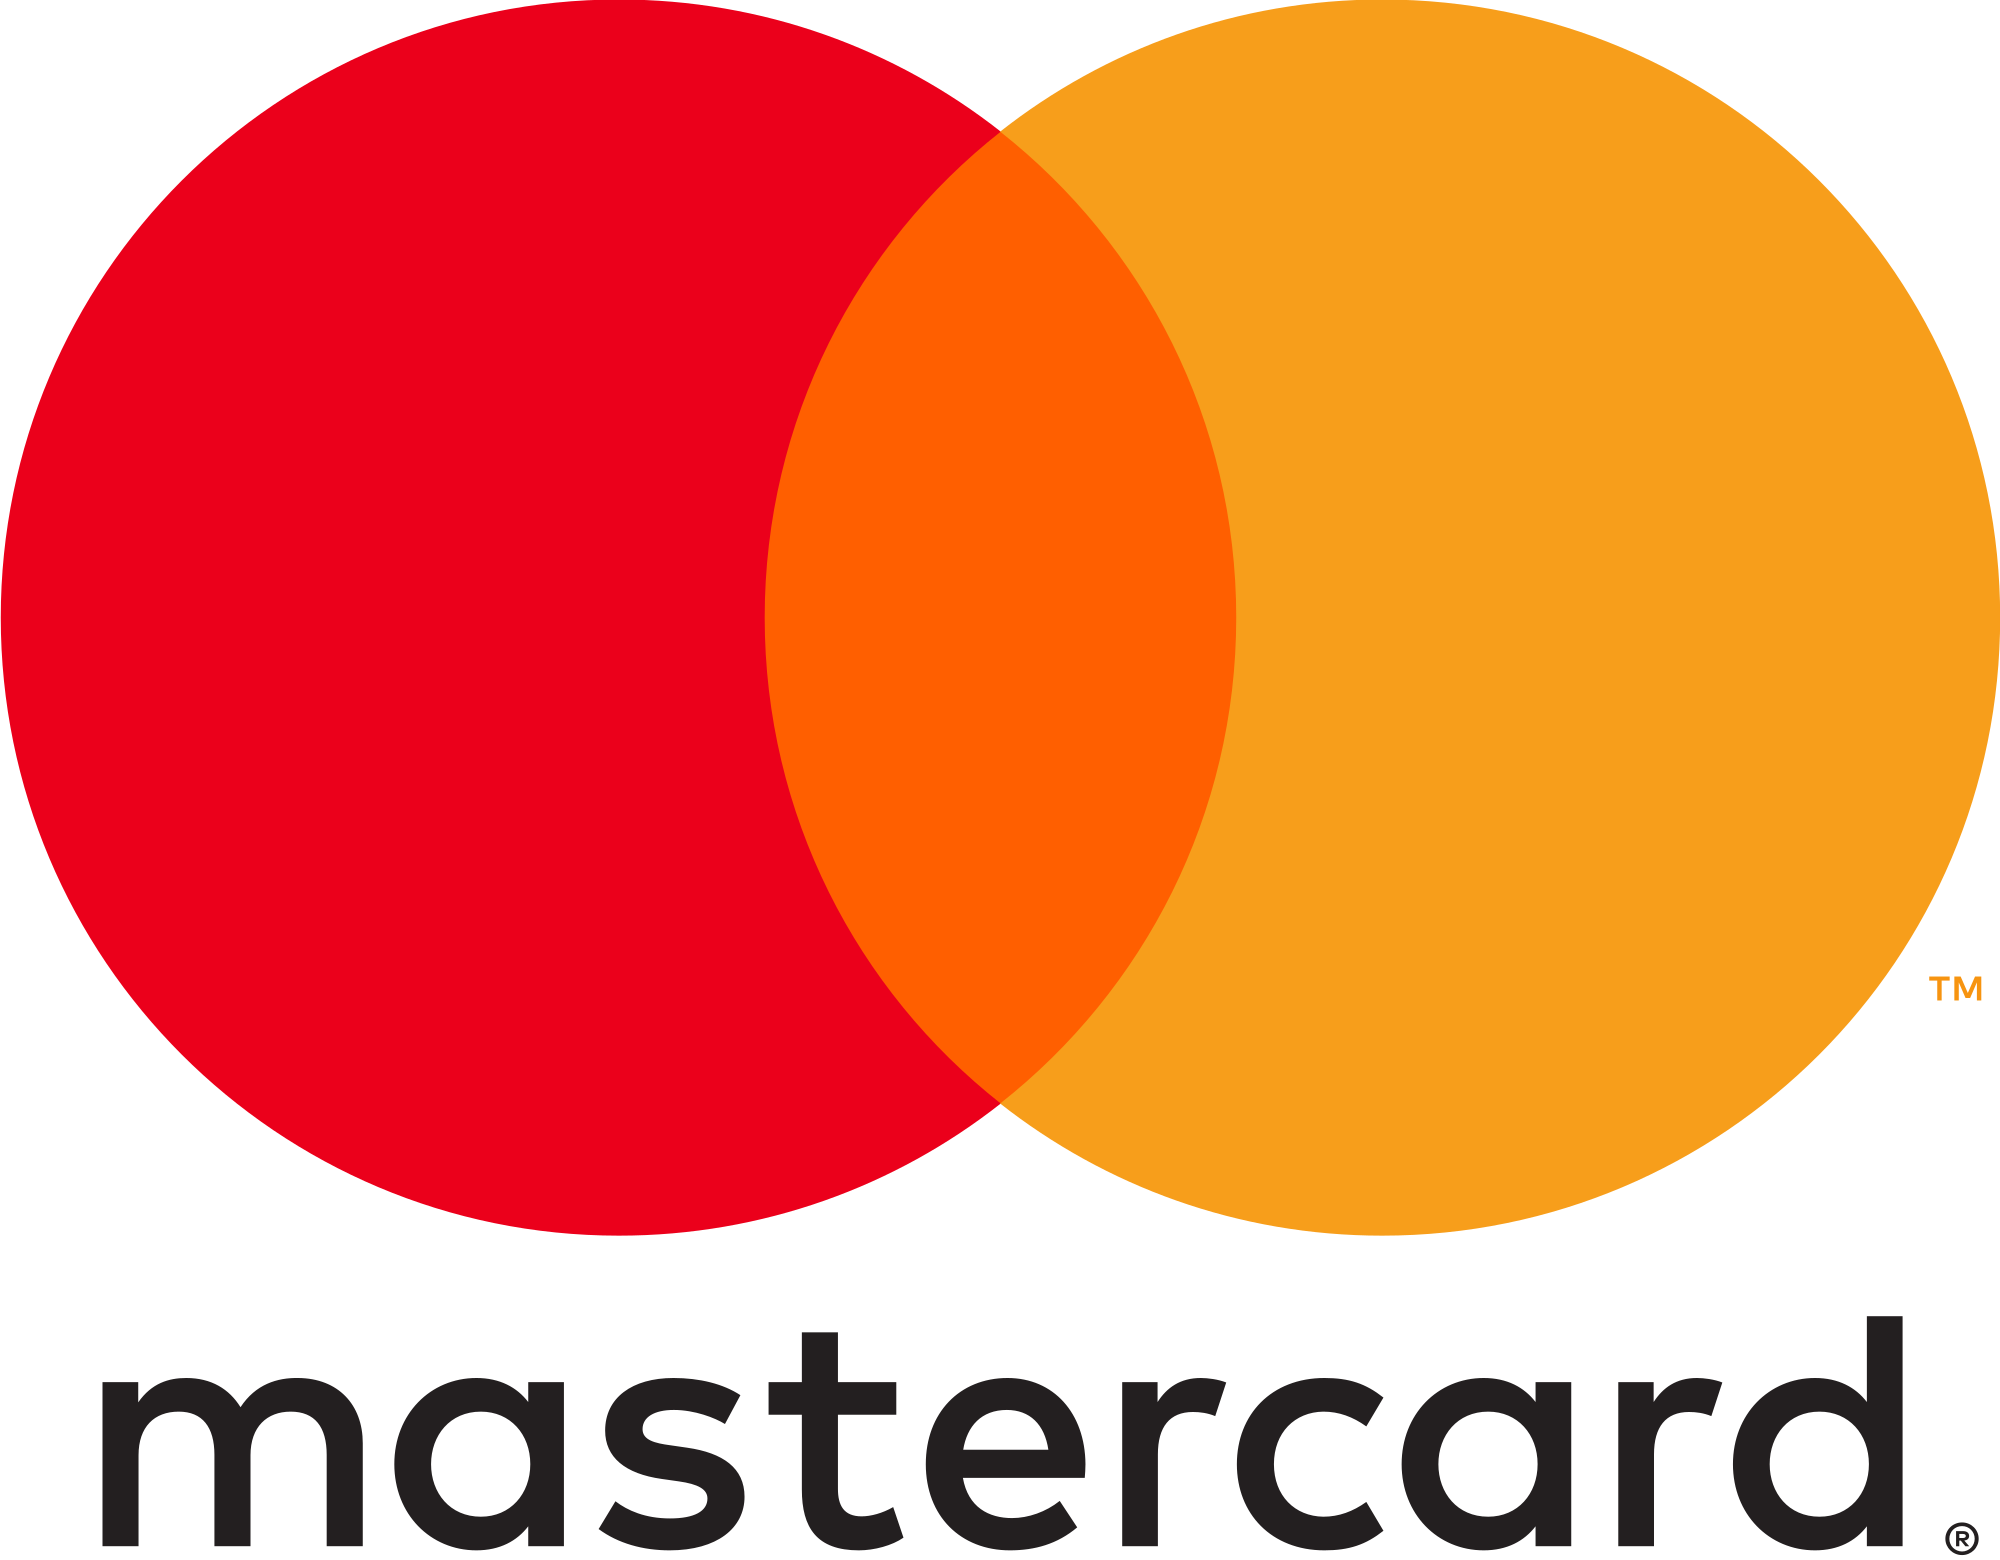 2000px-Mastercard-logo.svg